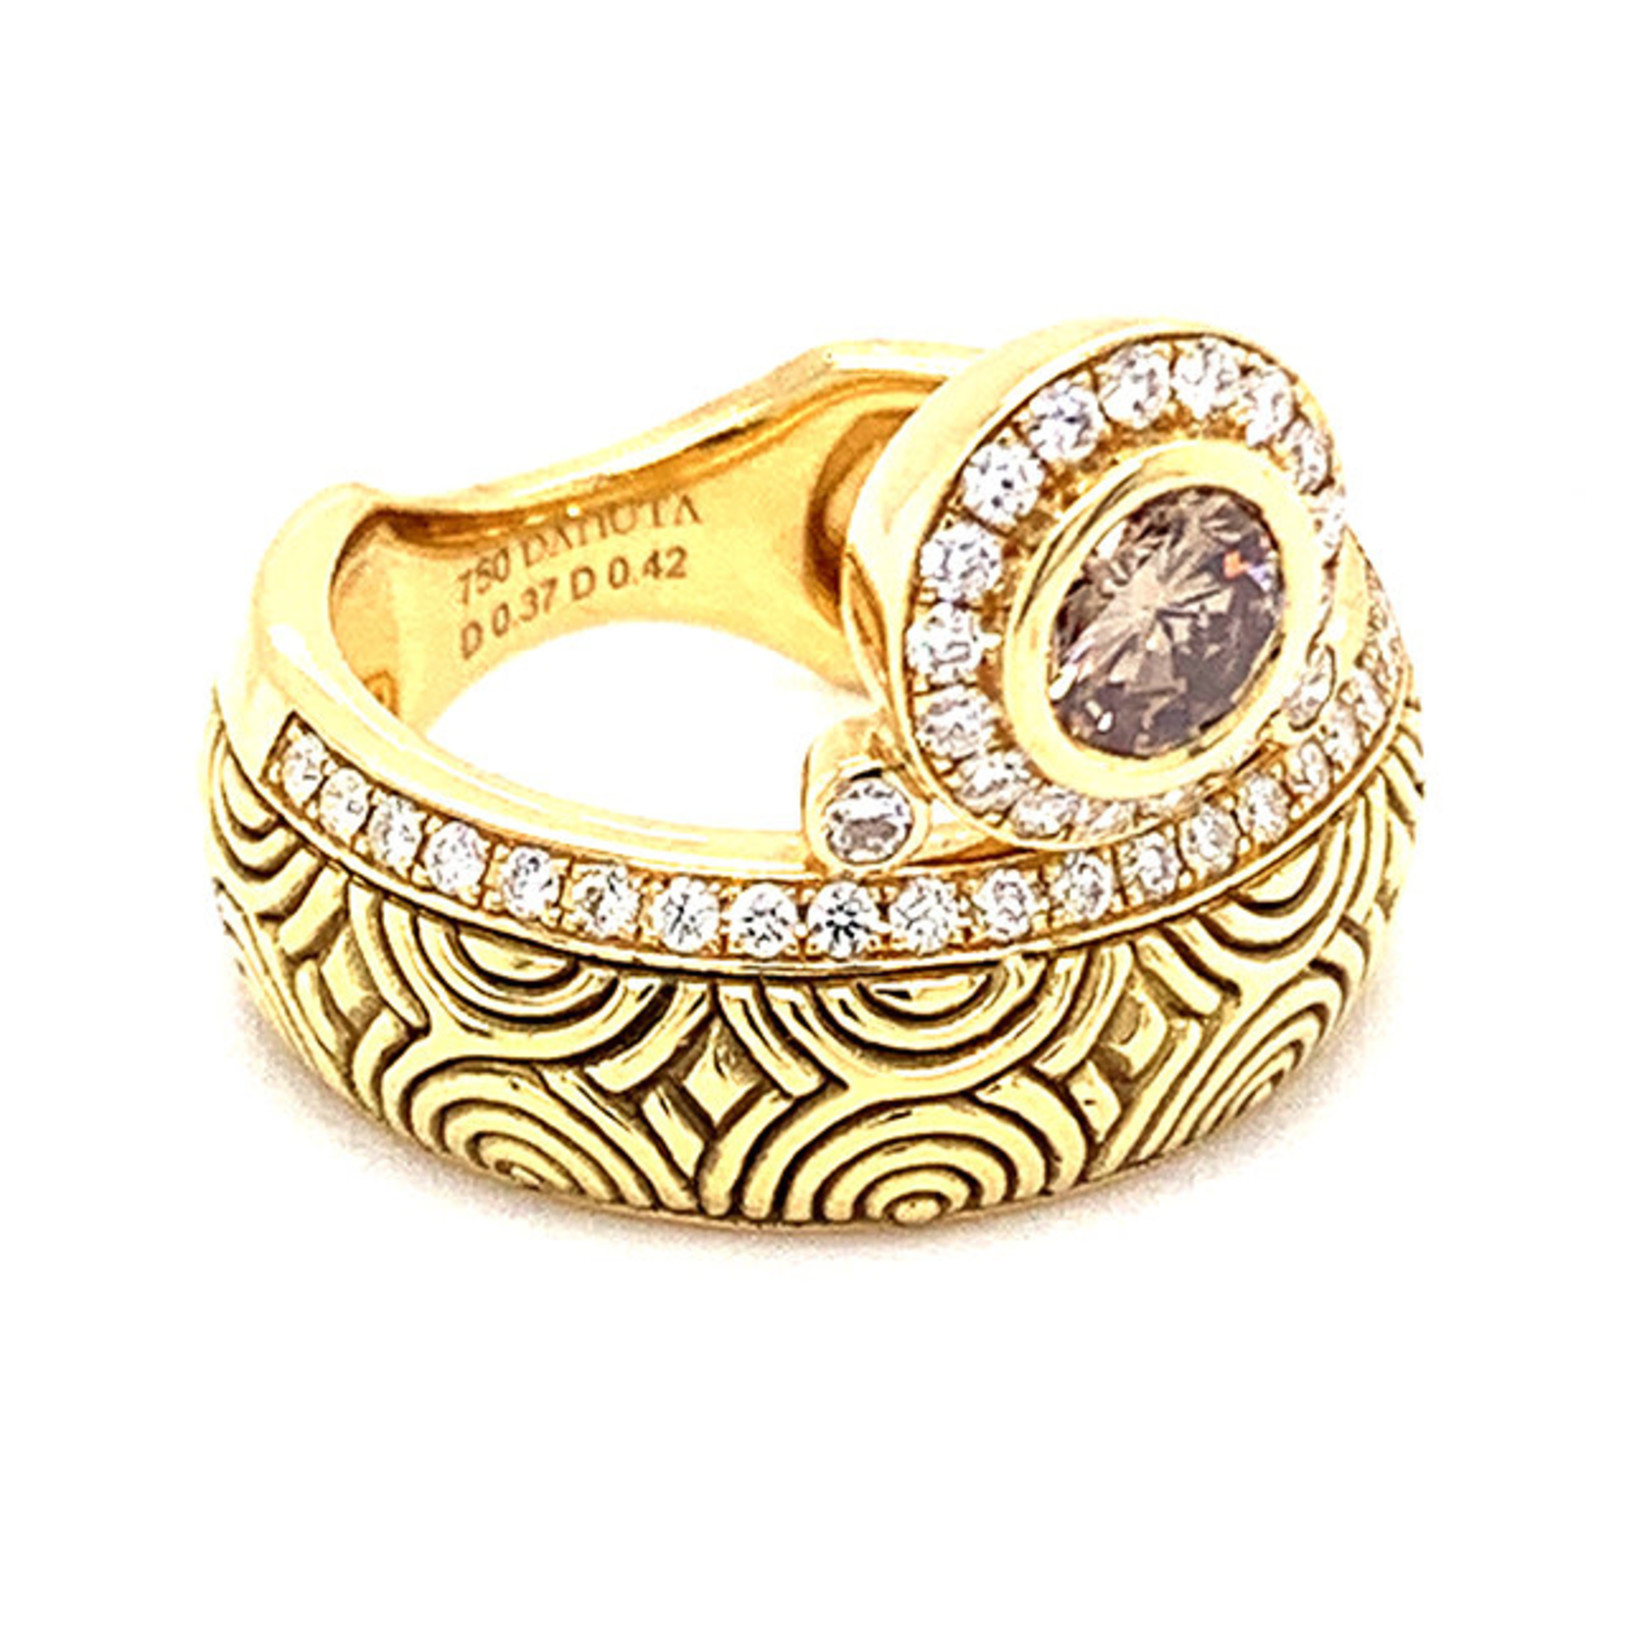 Jewelry By Danuta - Gold Drawer Cognac Diamond Gold Ring, .42 ct Co Dia .37 ct Dia